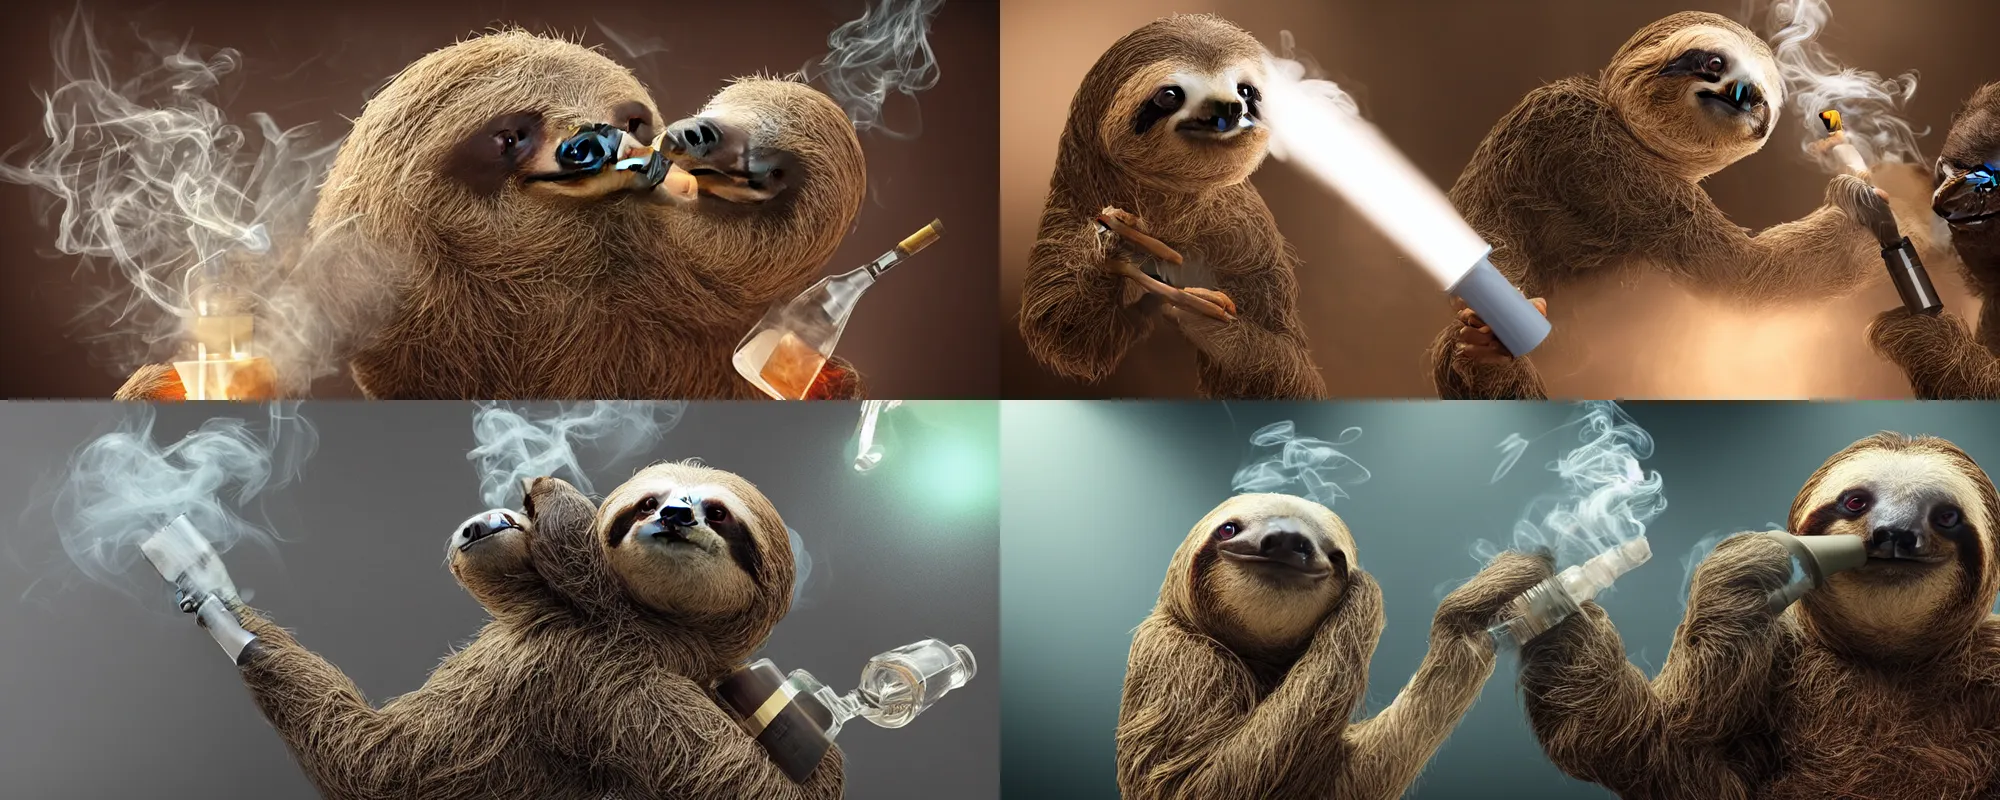 Prompt: a sloth exhaling smoke, a sloth using a bong, volumetric lighting, hyper realistic